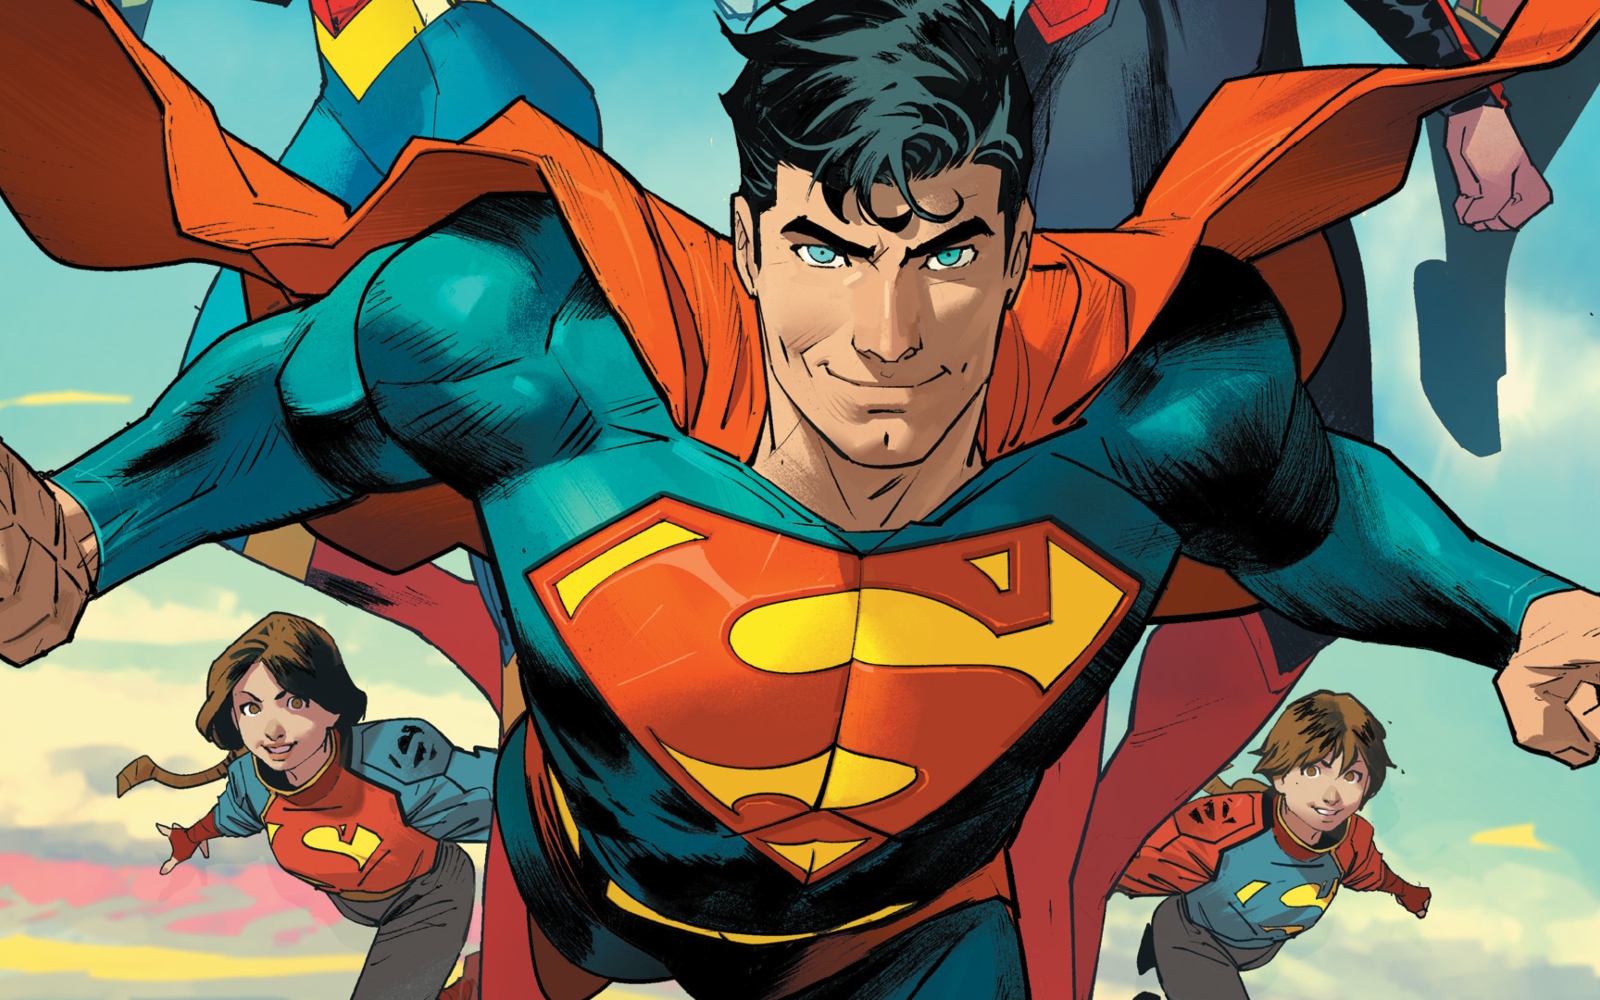 Dan Jurgens, Lee Weeks talk Superman family tales in 'Action Comics' #1051